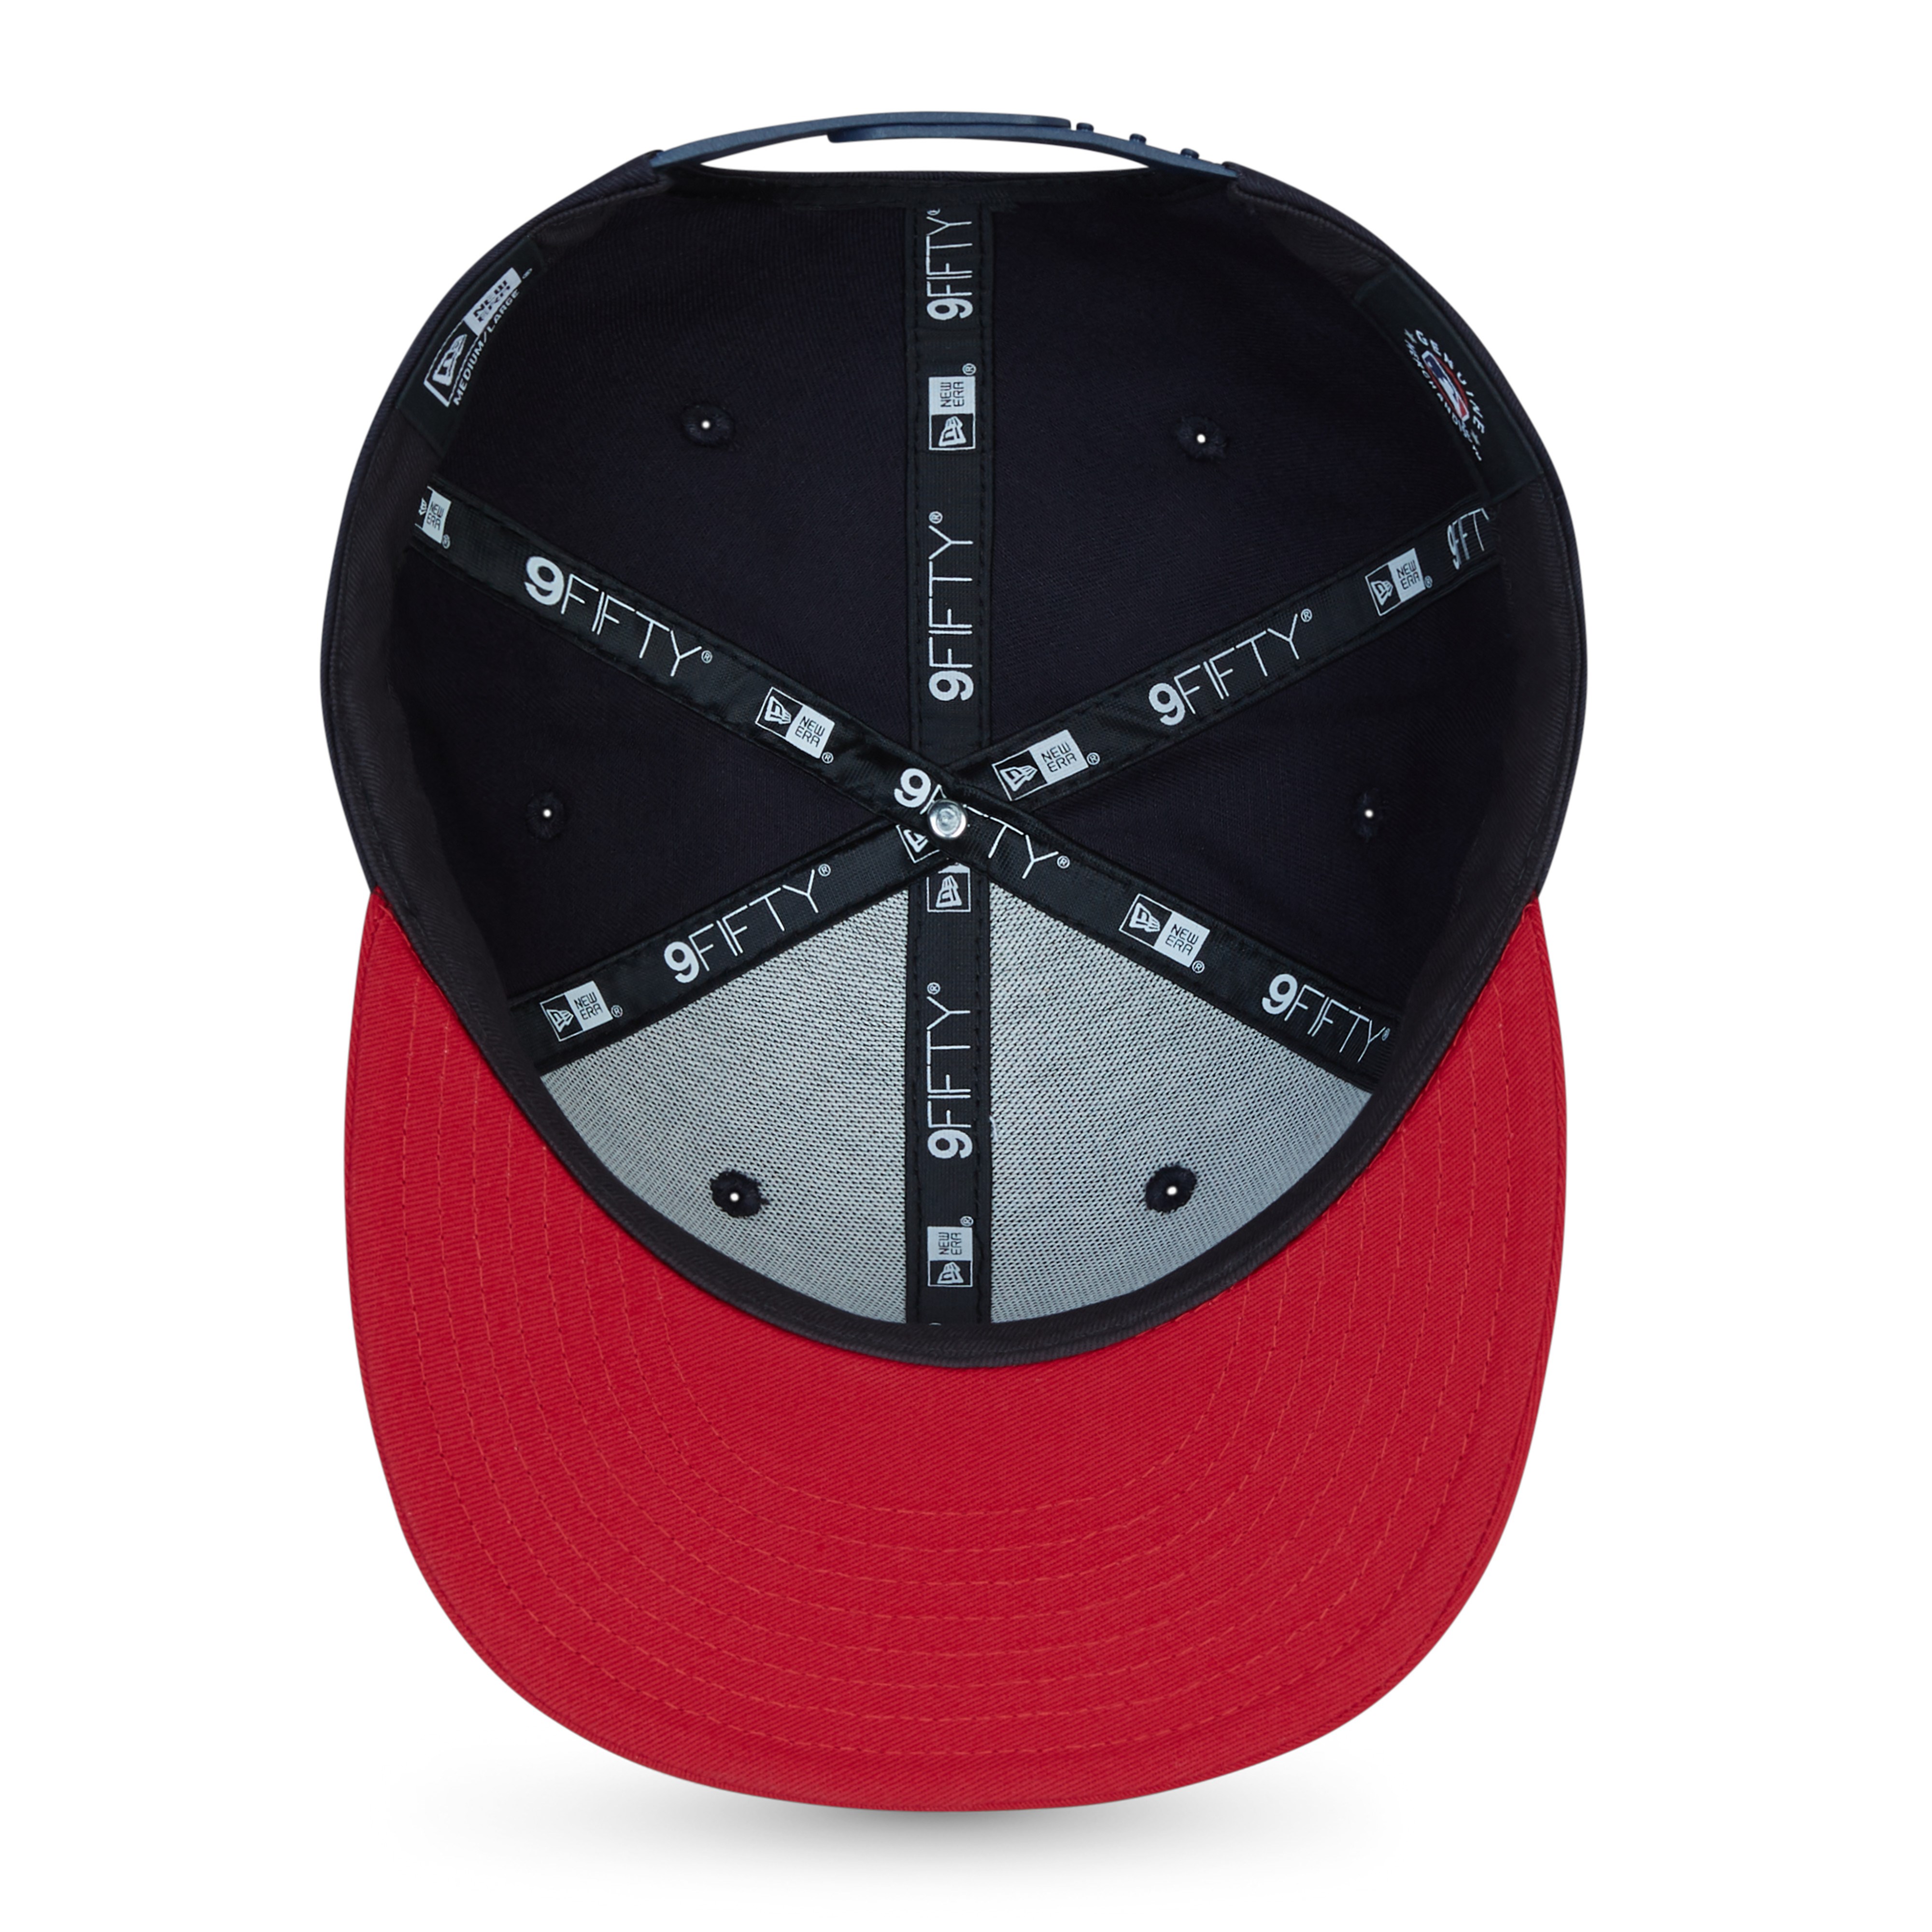 Atlanta Braves MLB Essentials Navy Red 9Fifty Snapback Cap New Era